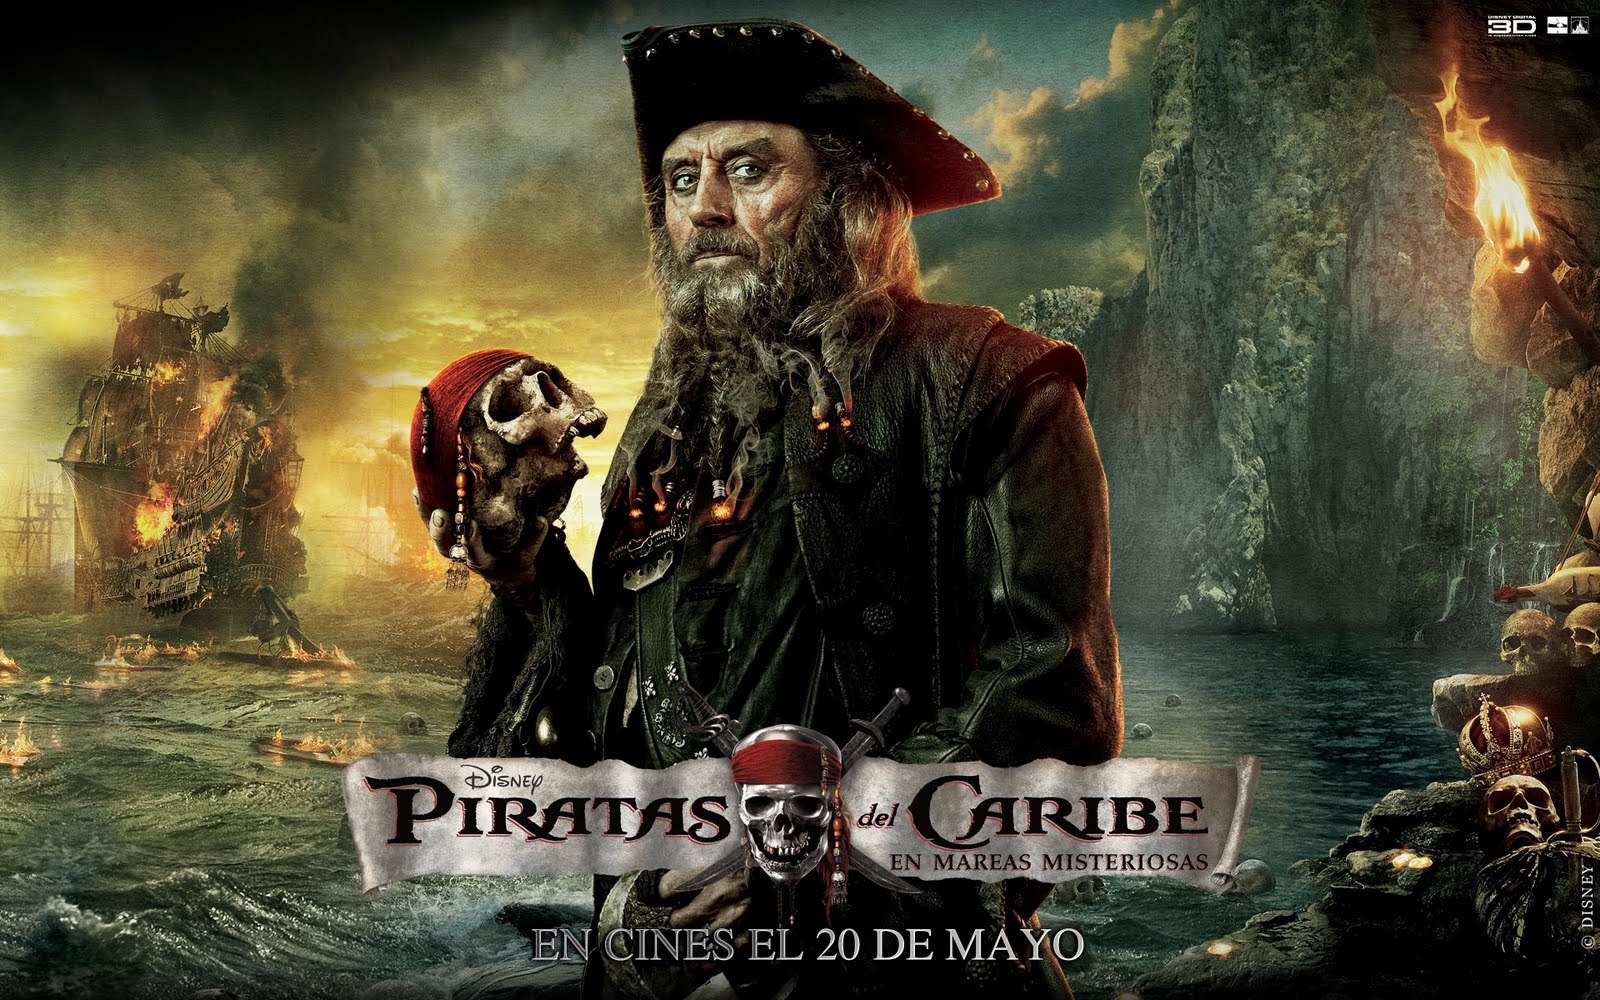 Piratas+del+caribe+5